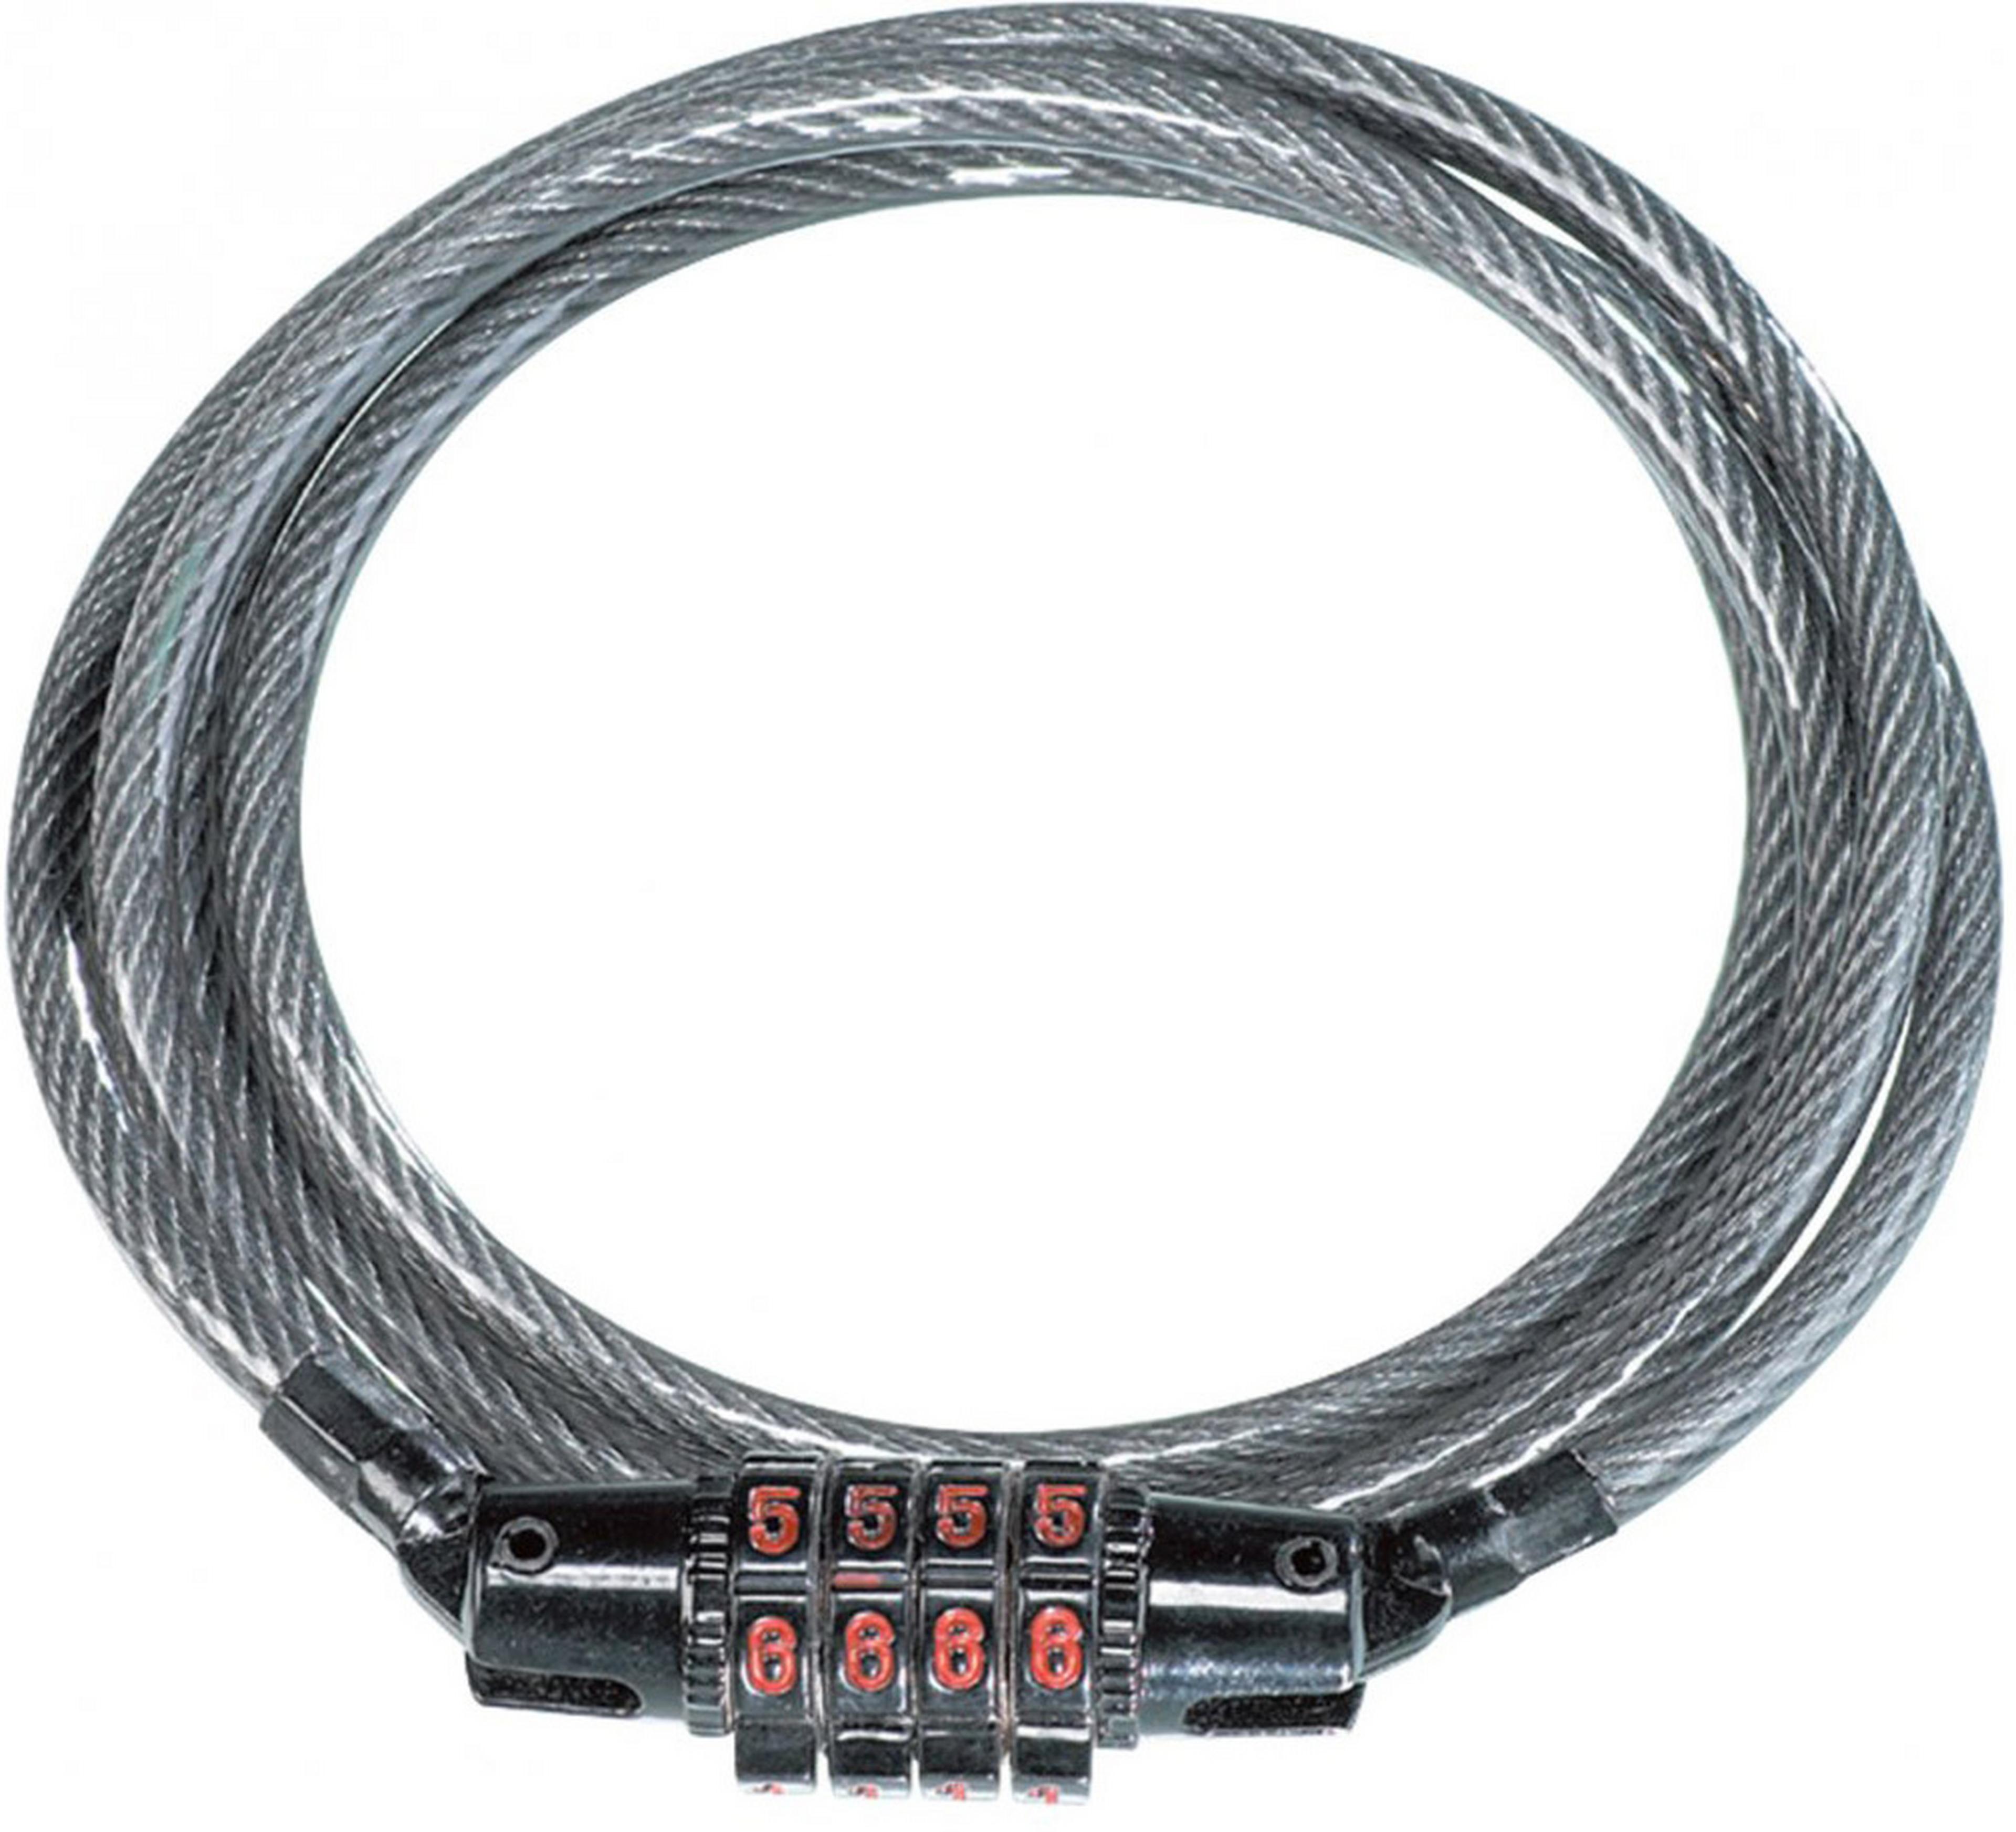 Buy Kryptonite Keeper Bike Lock with Flex Cable - 1.2m, Bike locks